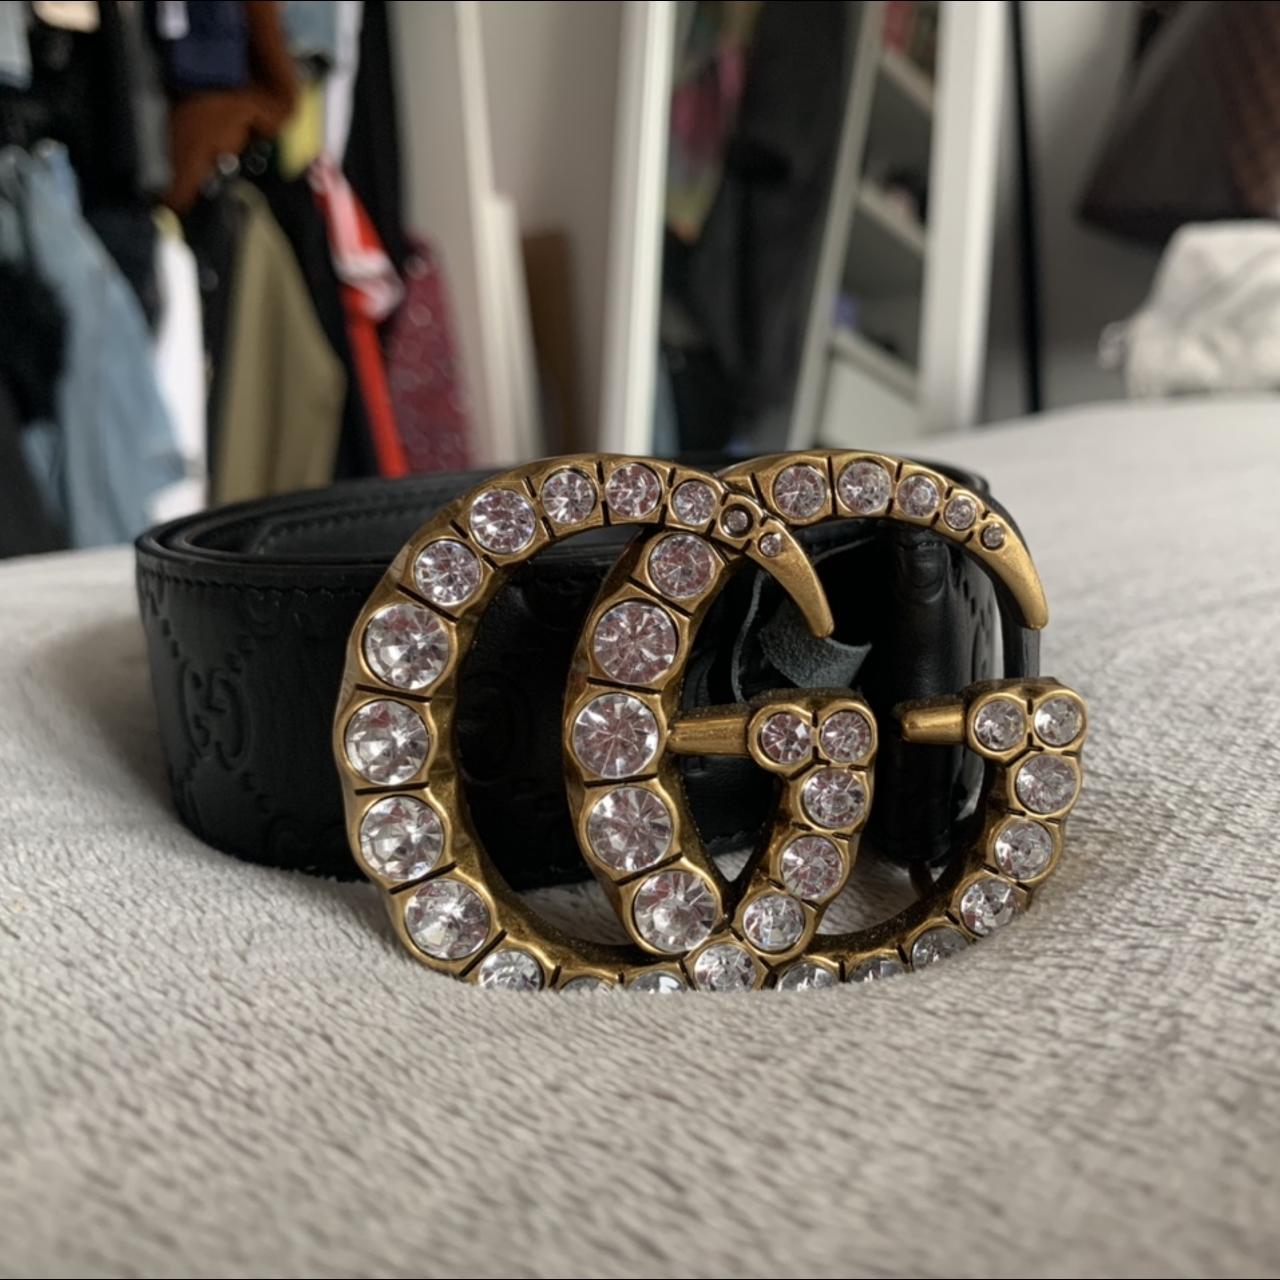 Gucci Womens Belts